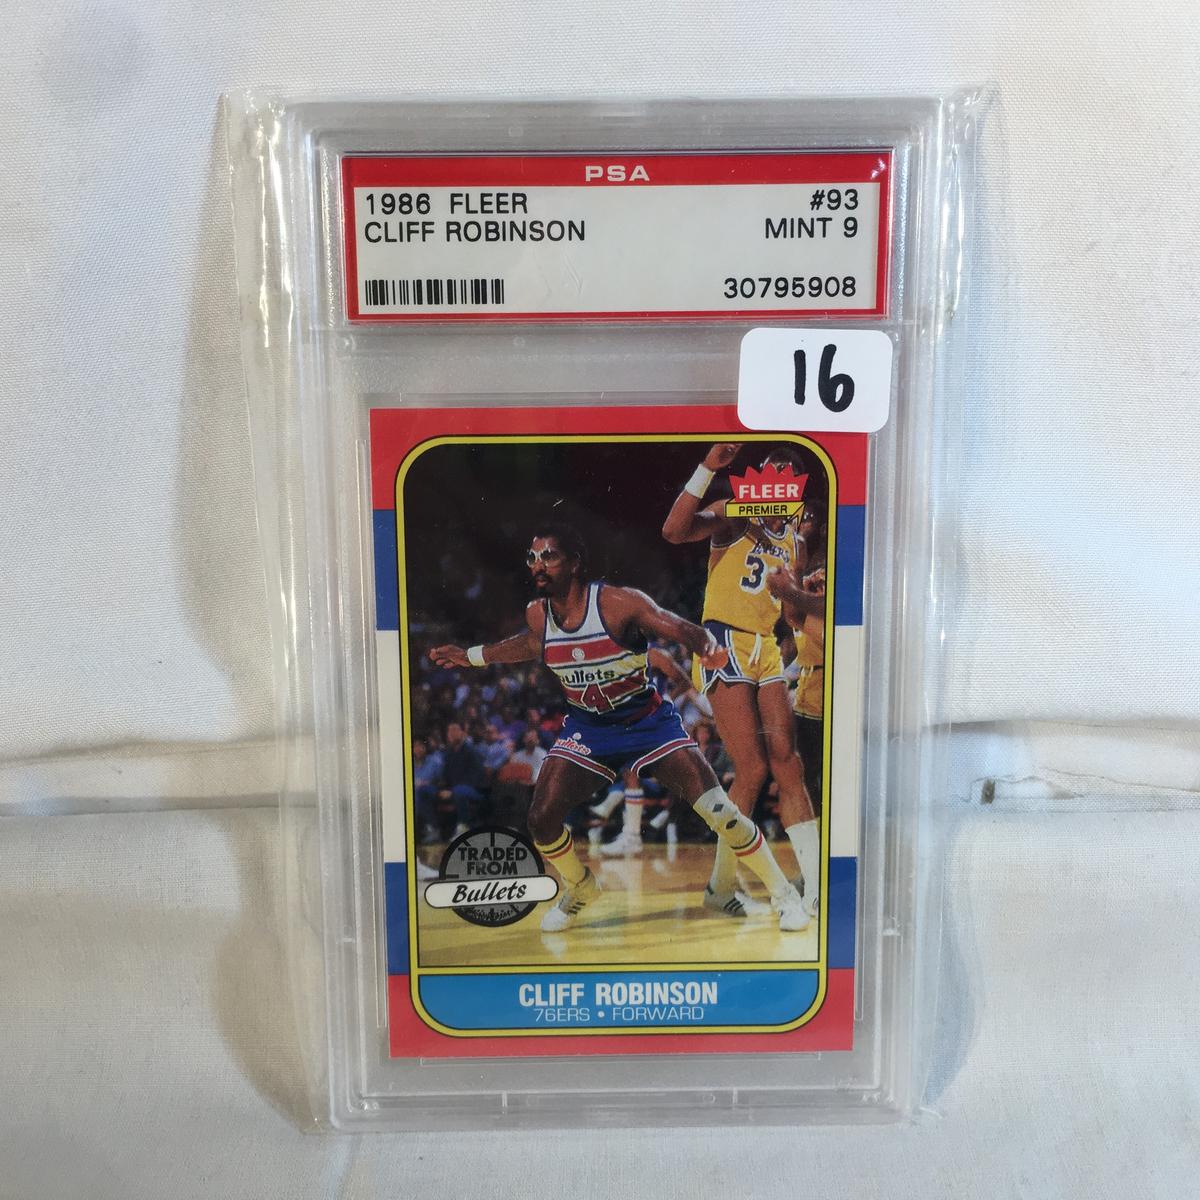 Collector Vintage PSA Graded 1986 Fleer #93 Cliff Robinson Mint 9 30795908 NBA Sports Card